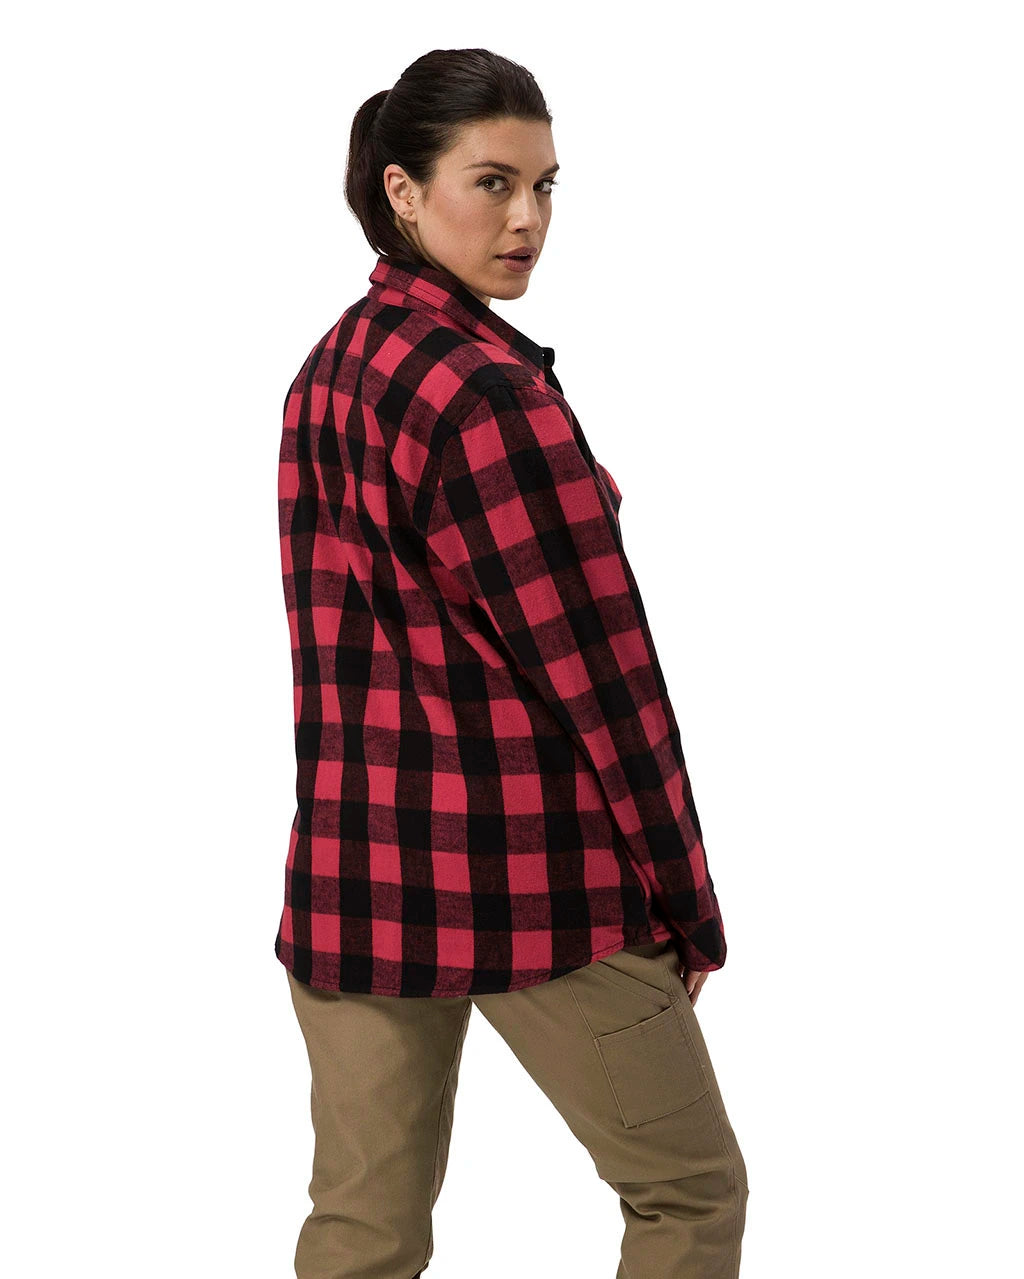 Cat 1610032 Women's Buffalo Check Overshirt - Red/Black 2X-Large Regular